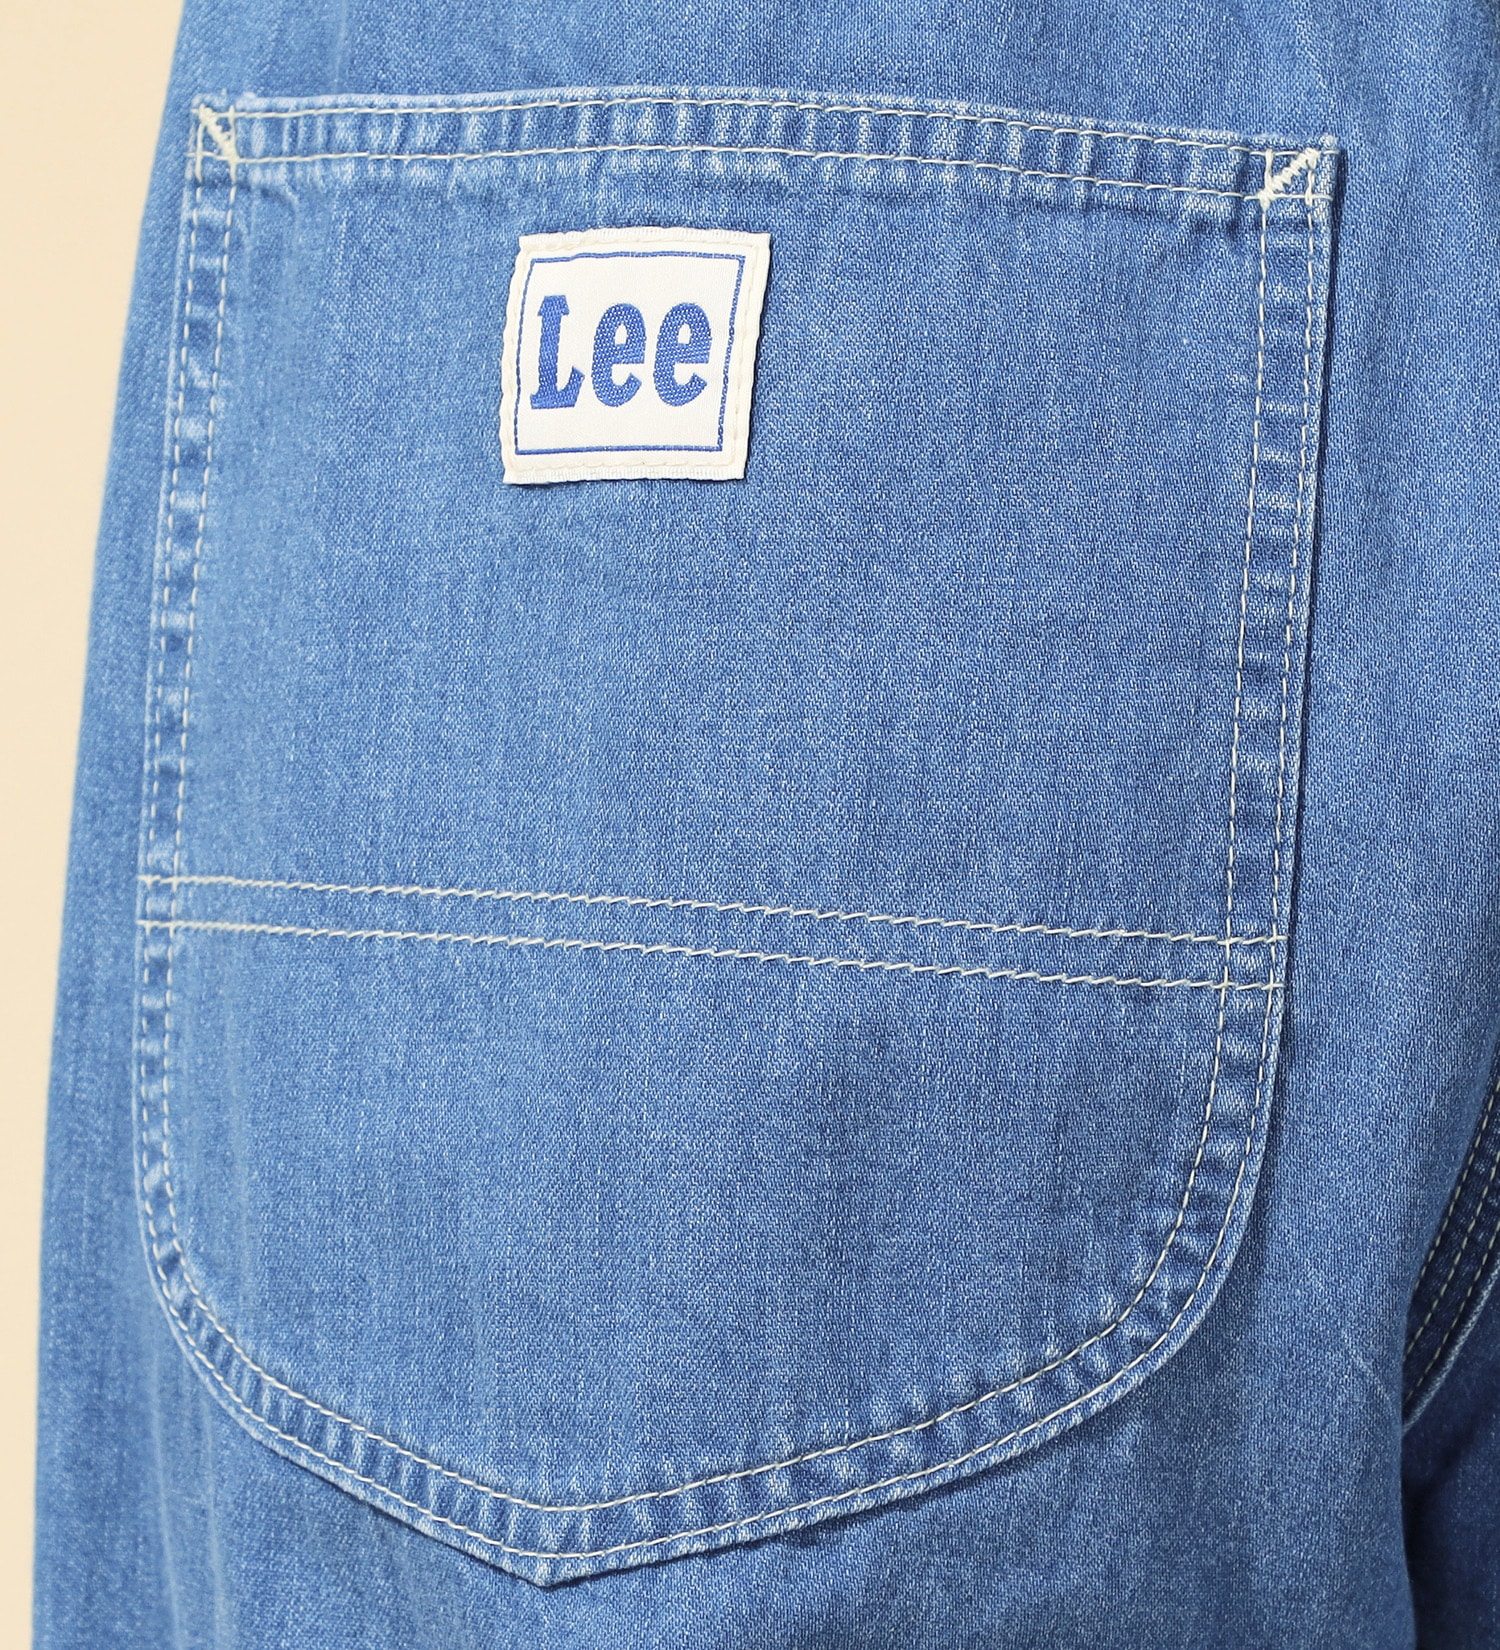 Lee(リー)の【軽くて涼しいワイド】リラックス イージーペインターパンツ/通気性抜群/ムレにくい/夏に快適パンツ|パンツ/デニムパンツ/レディース|中色ブルー